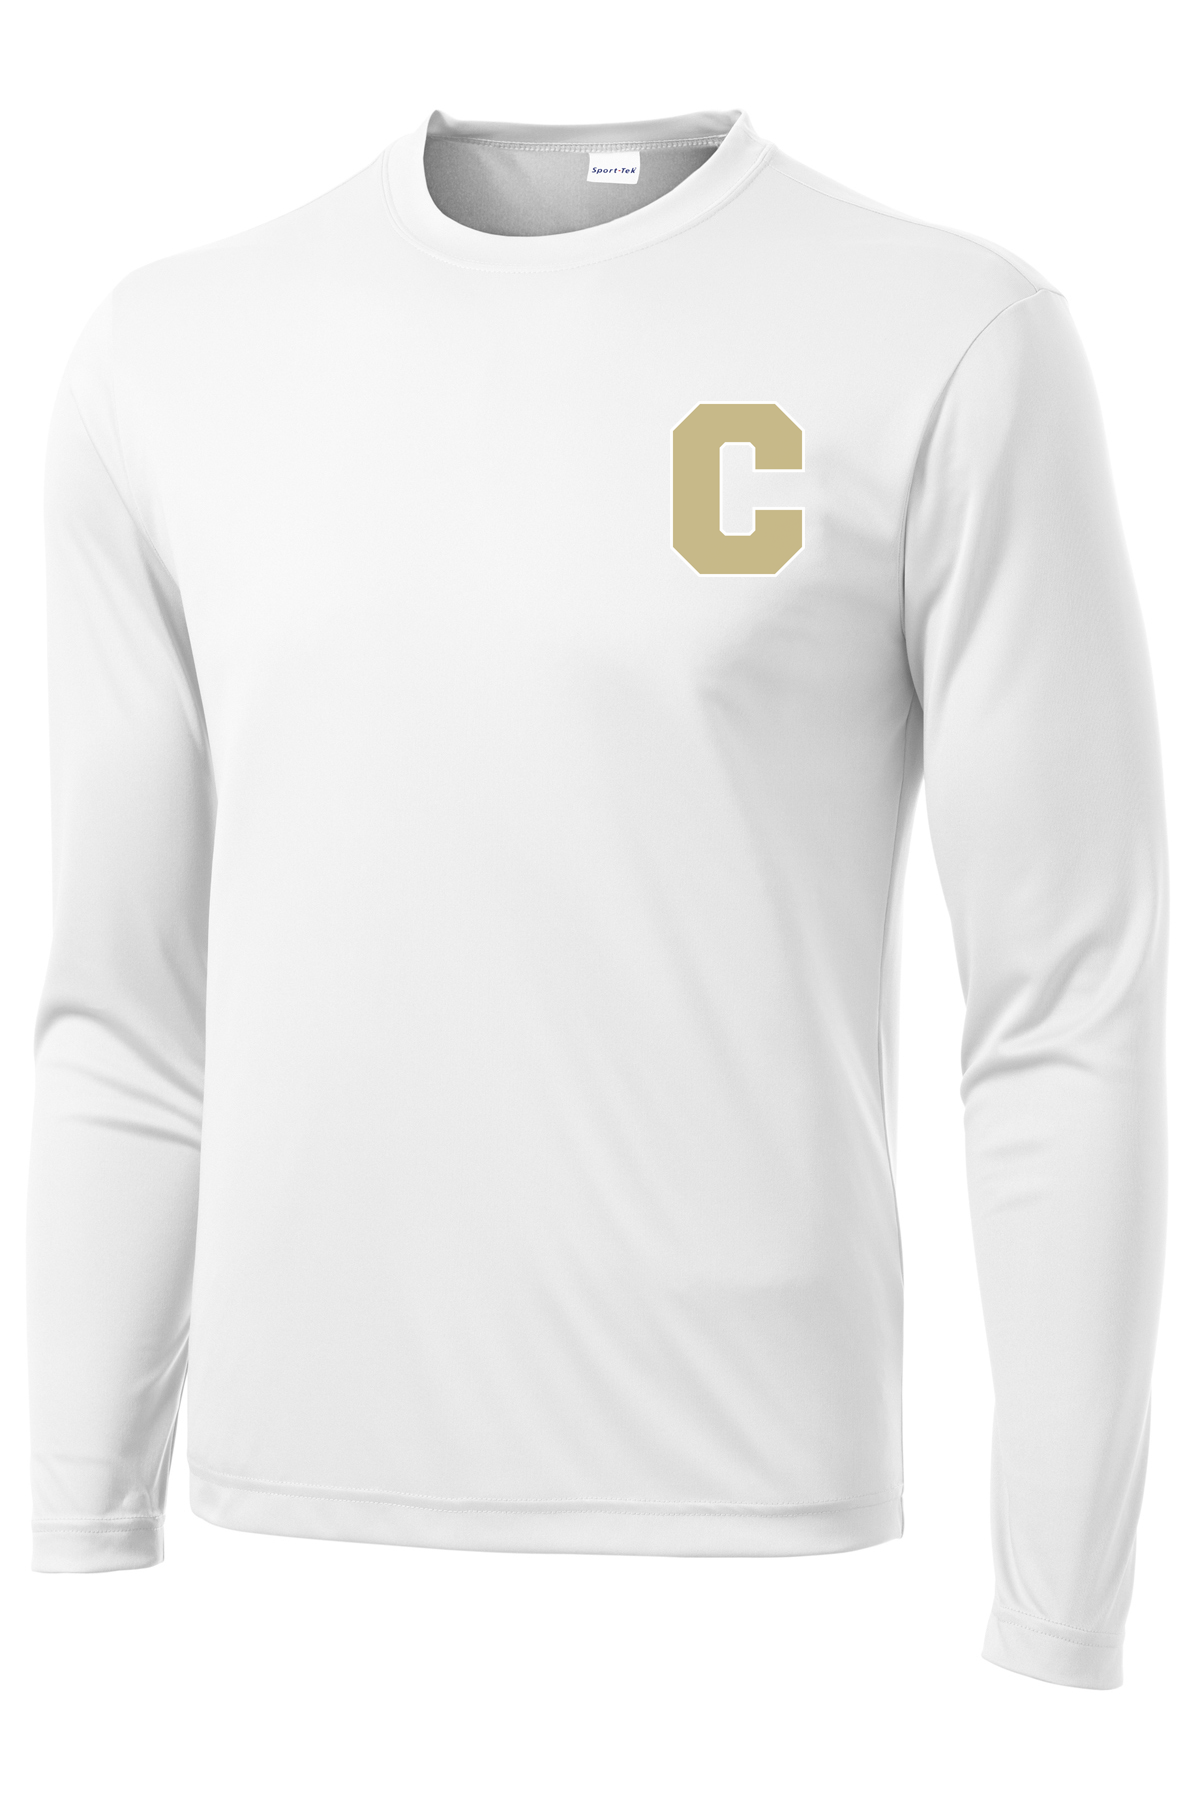 Century Lacrosse White Long Sleeve Performance Shirt